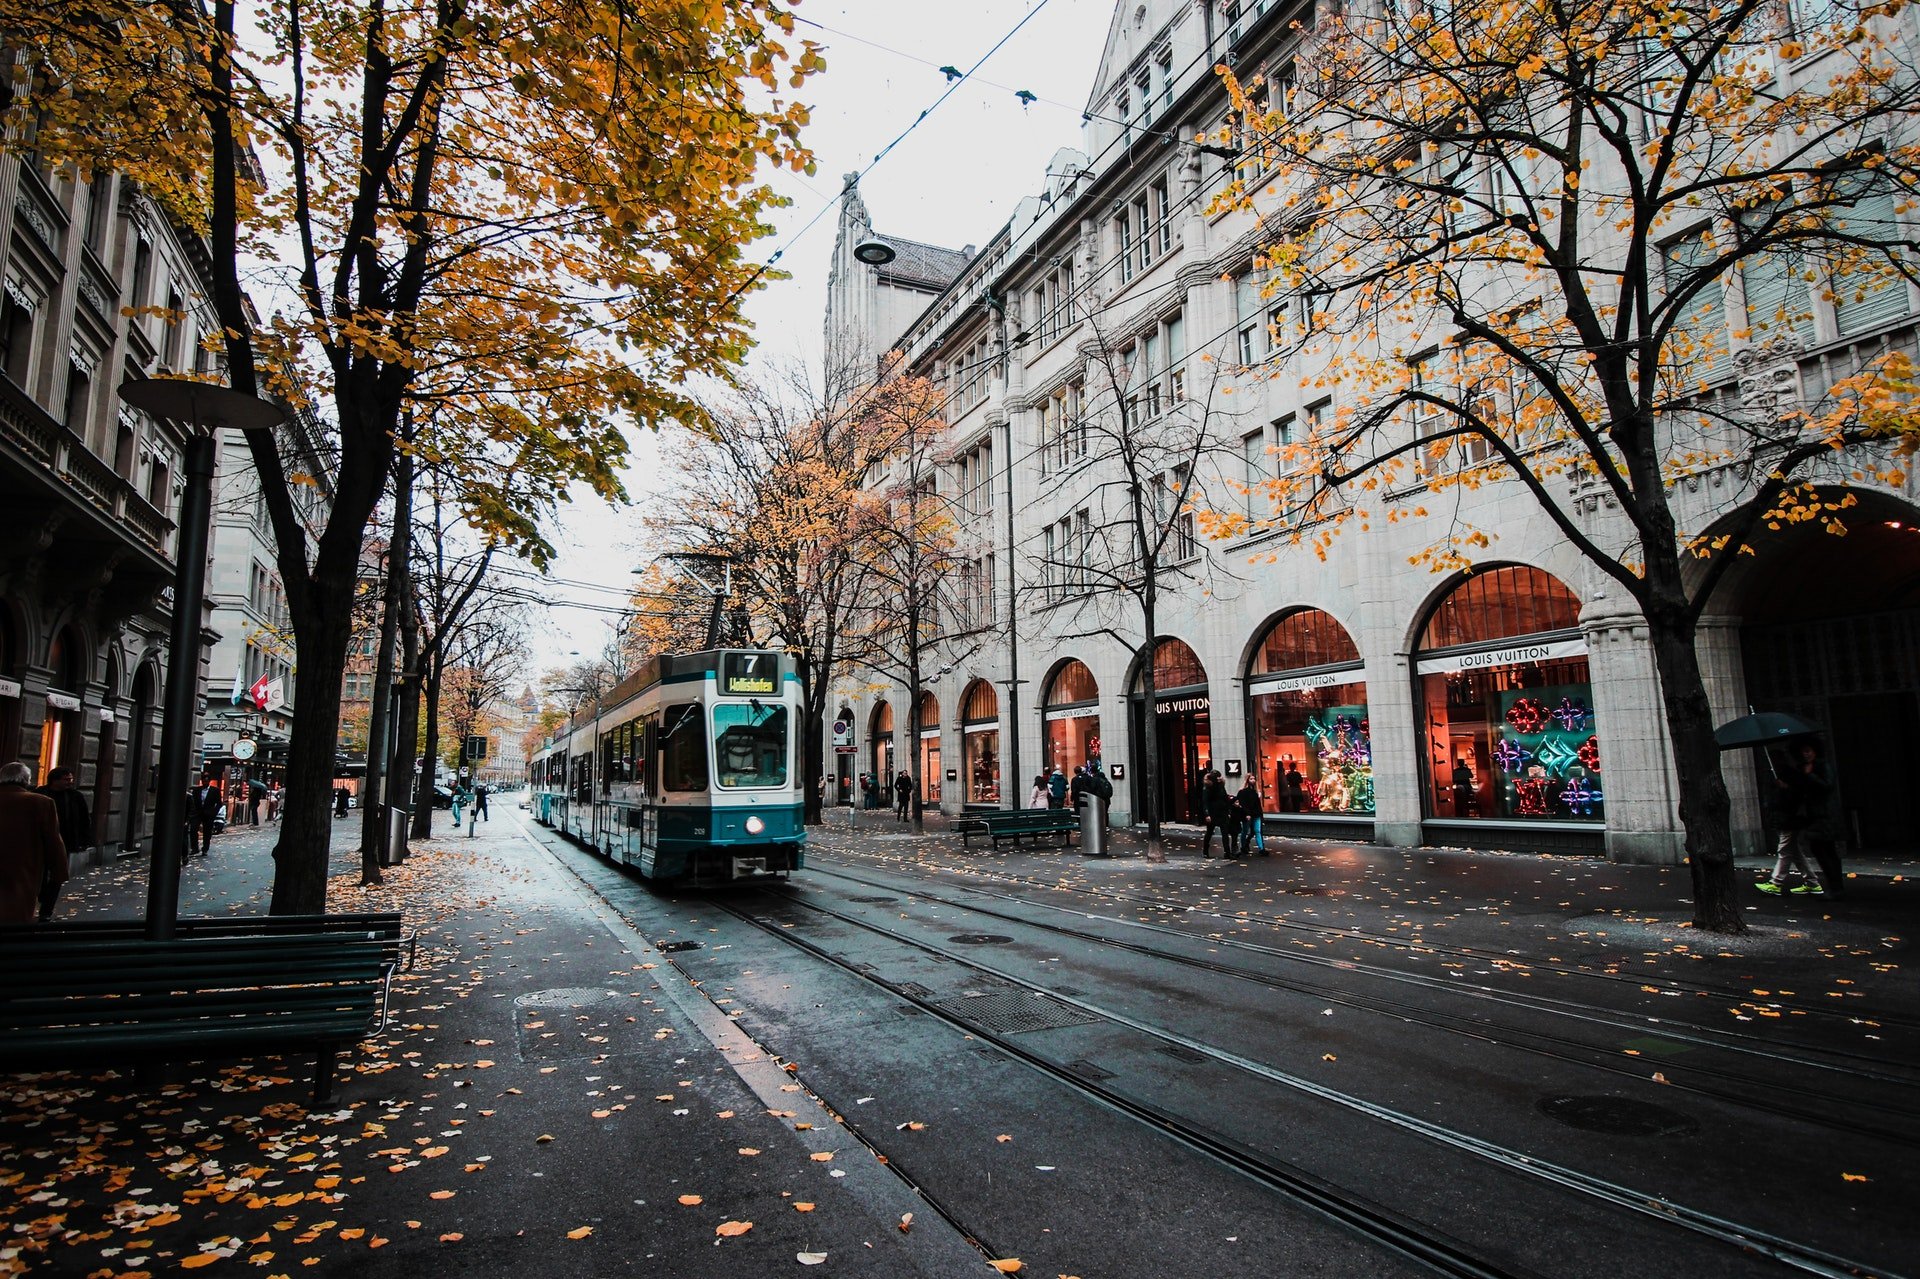 tram on historic street